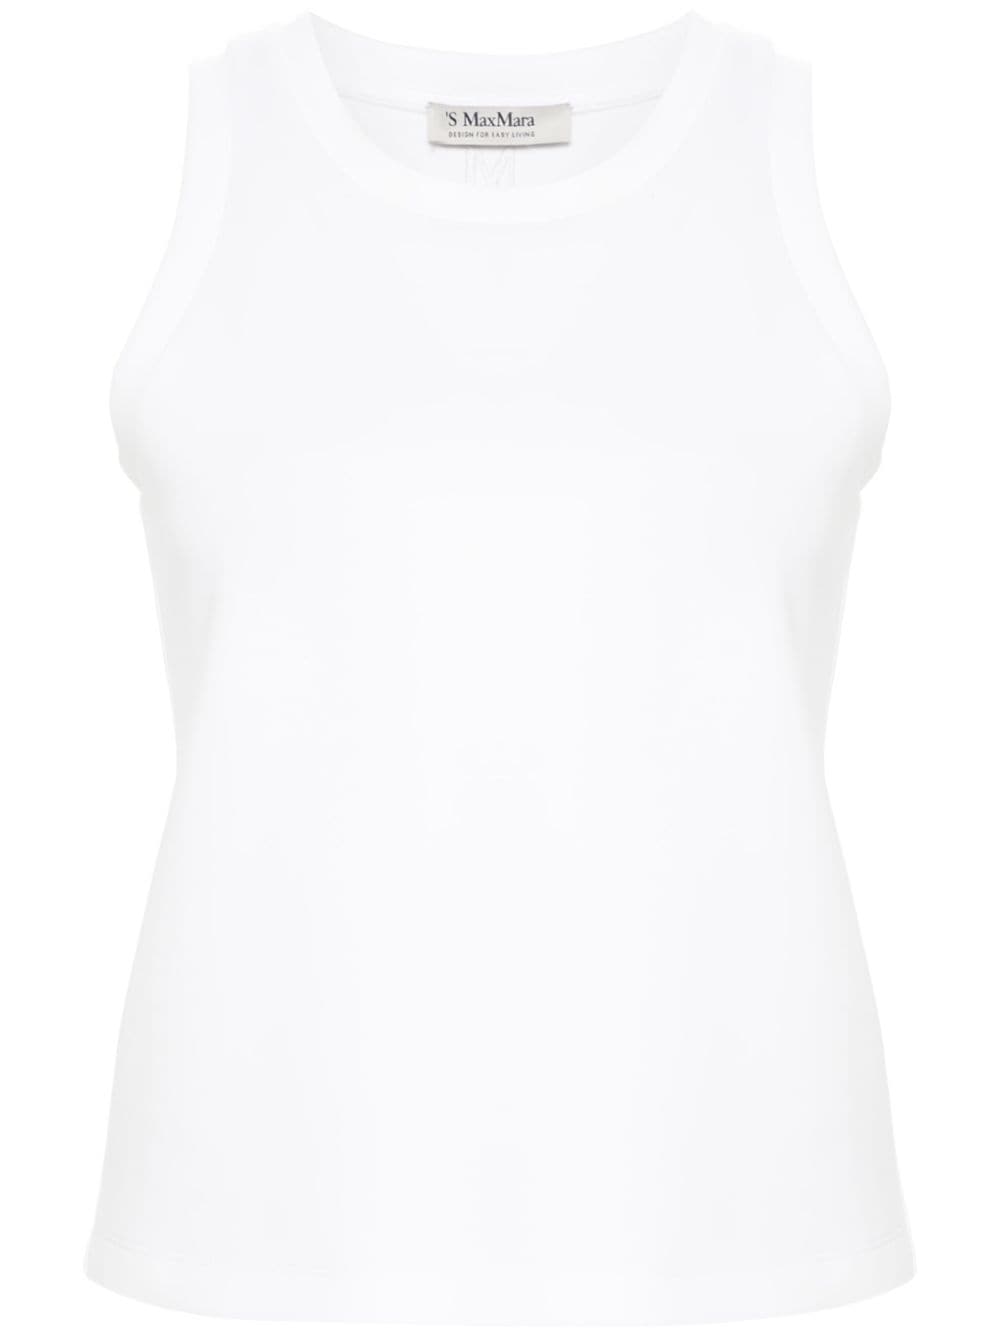 'S Max Mara embroidered-logo tank top - White von 'S Max Mara